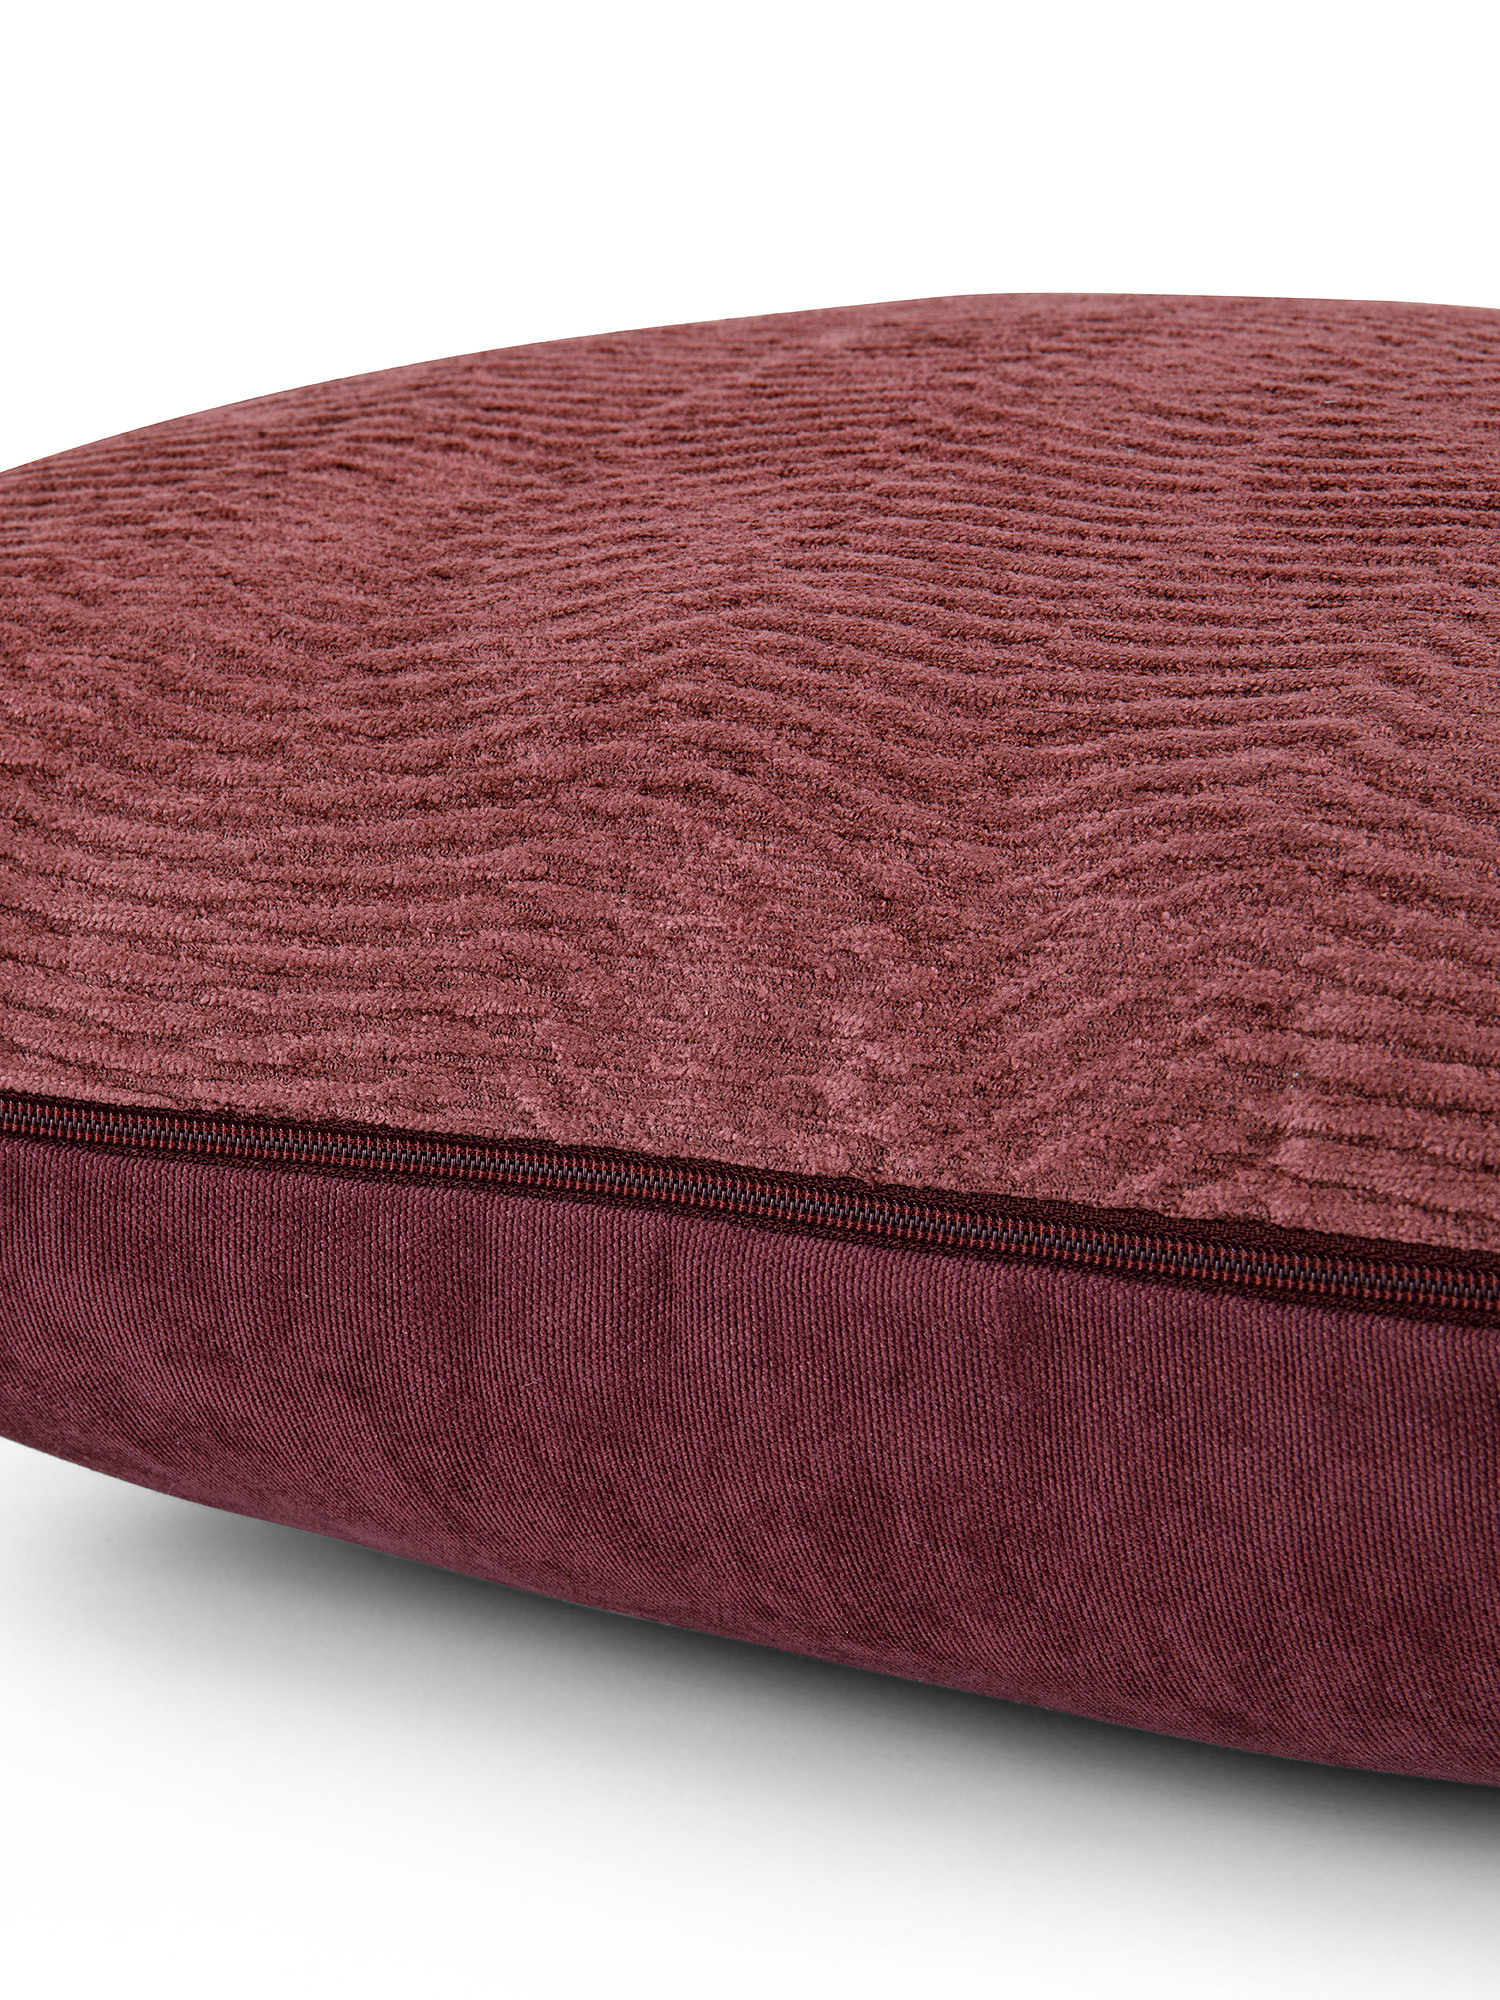 Embossed jacquard velvet cushion 45x45cm, Brown, large image number 2